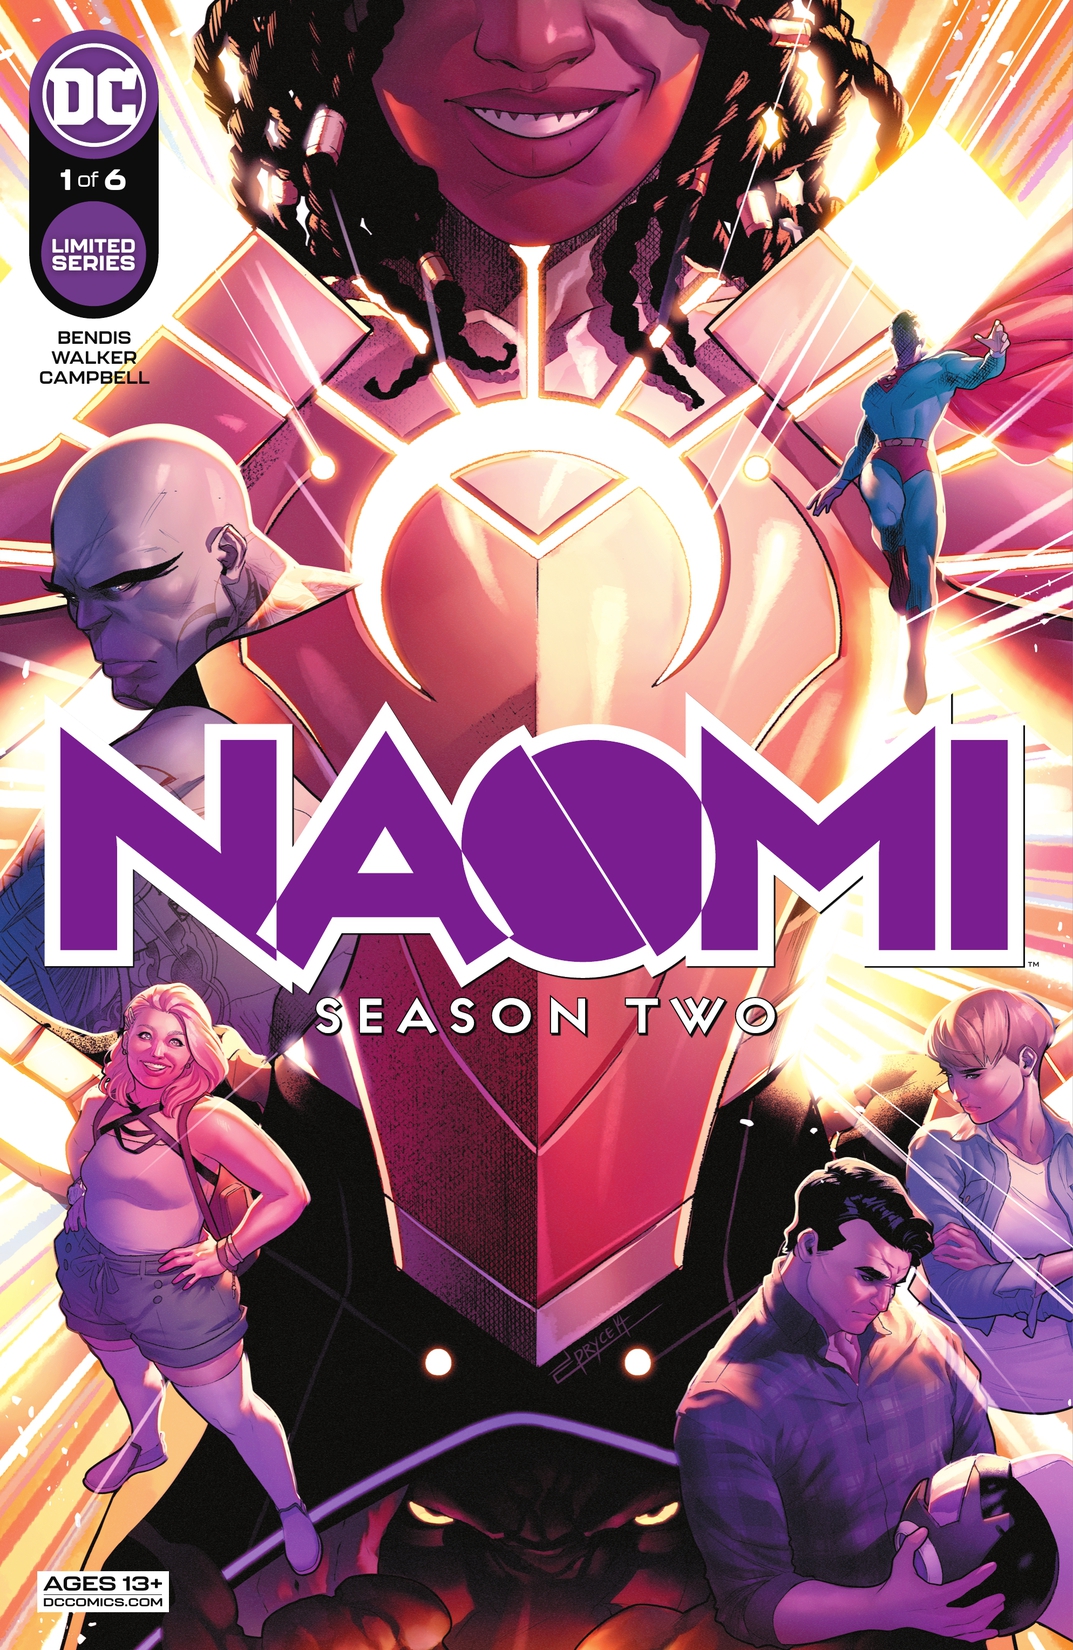 Naomi: Season Two #1 preview images